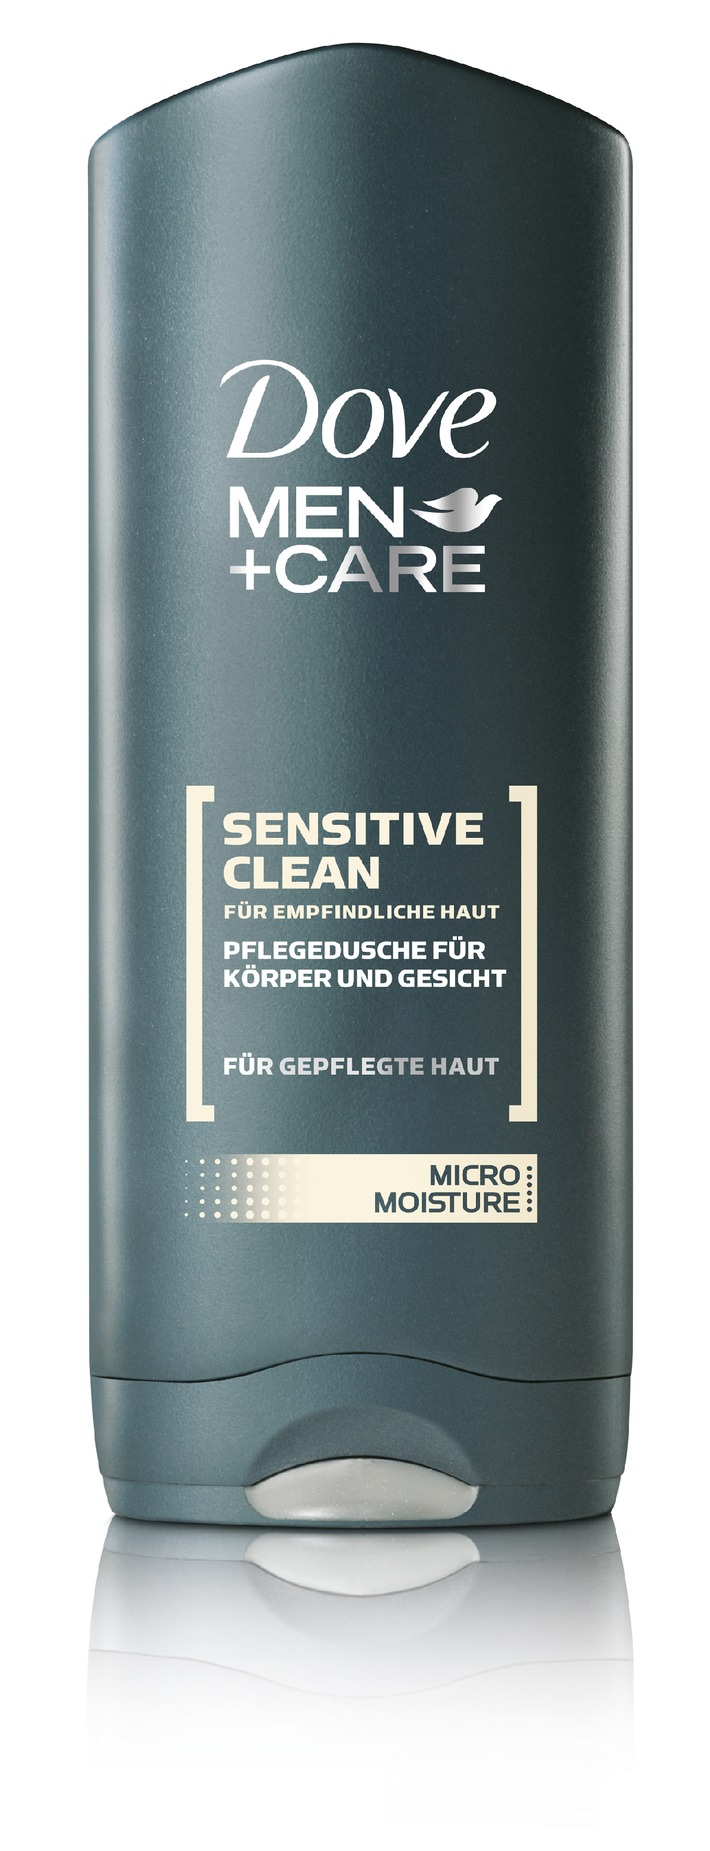 Neu: Dove MEN+CARE Sensitive Clean ergänzt Dove Männerpflegeserie (mit Bild)